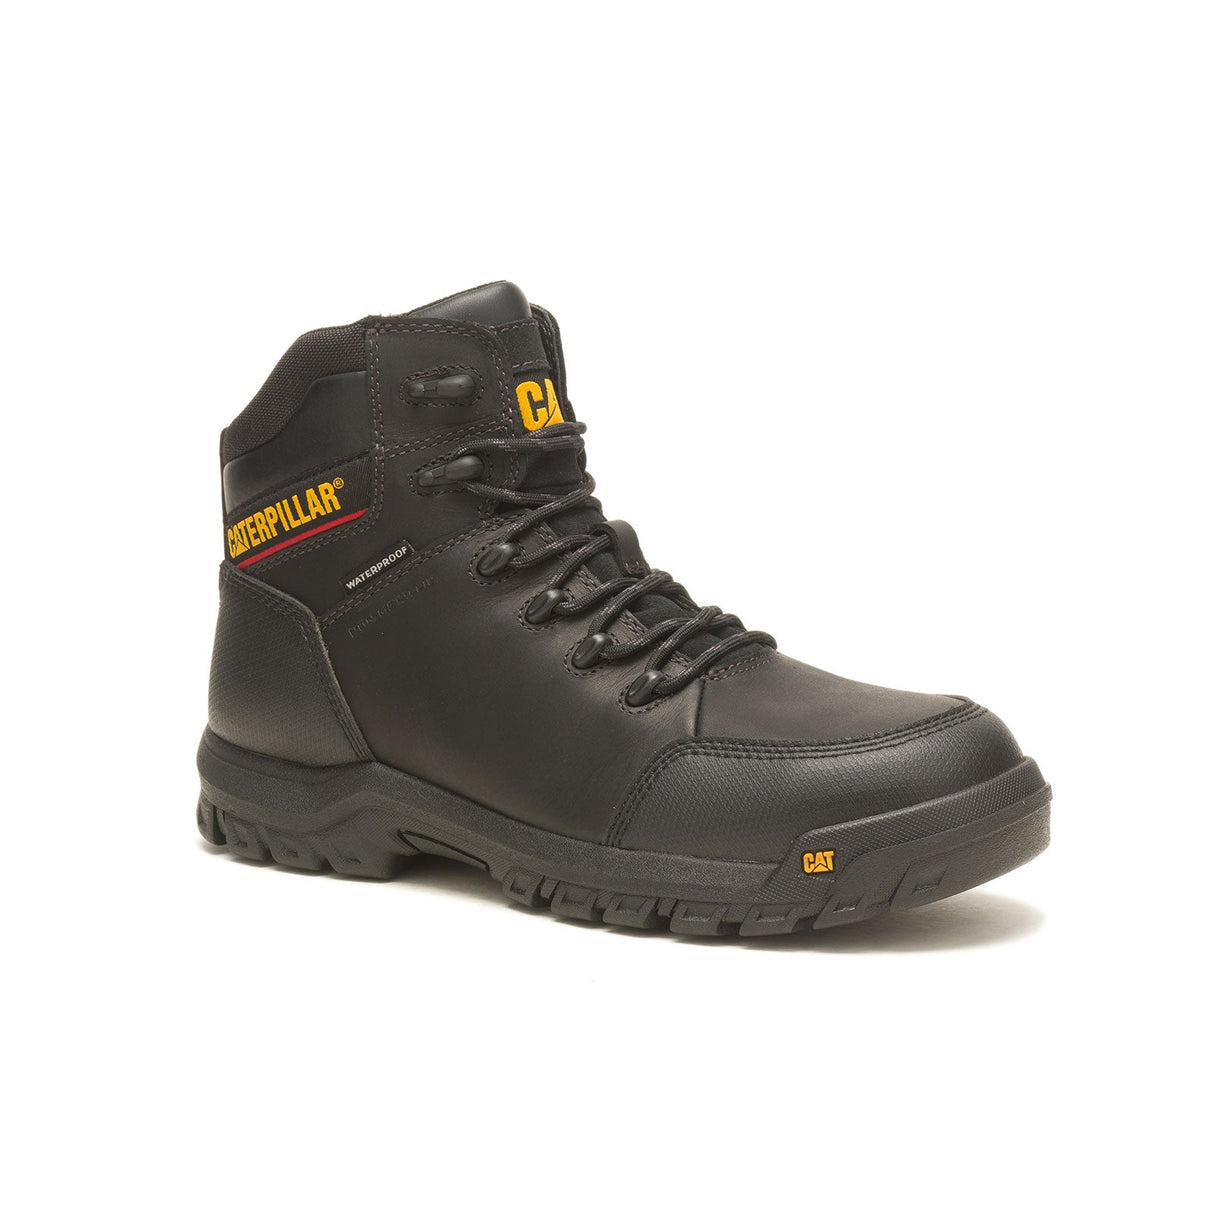 Caterpillar Resorption 2 8 Men's Composite-Toe Work Boots Wp P90976-2